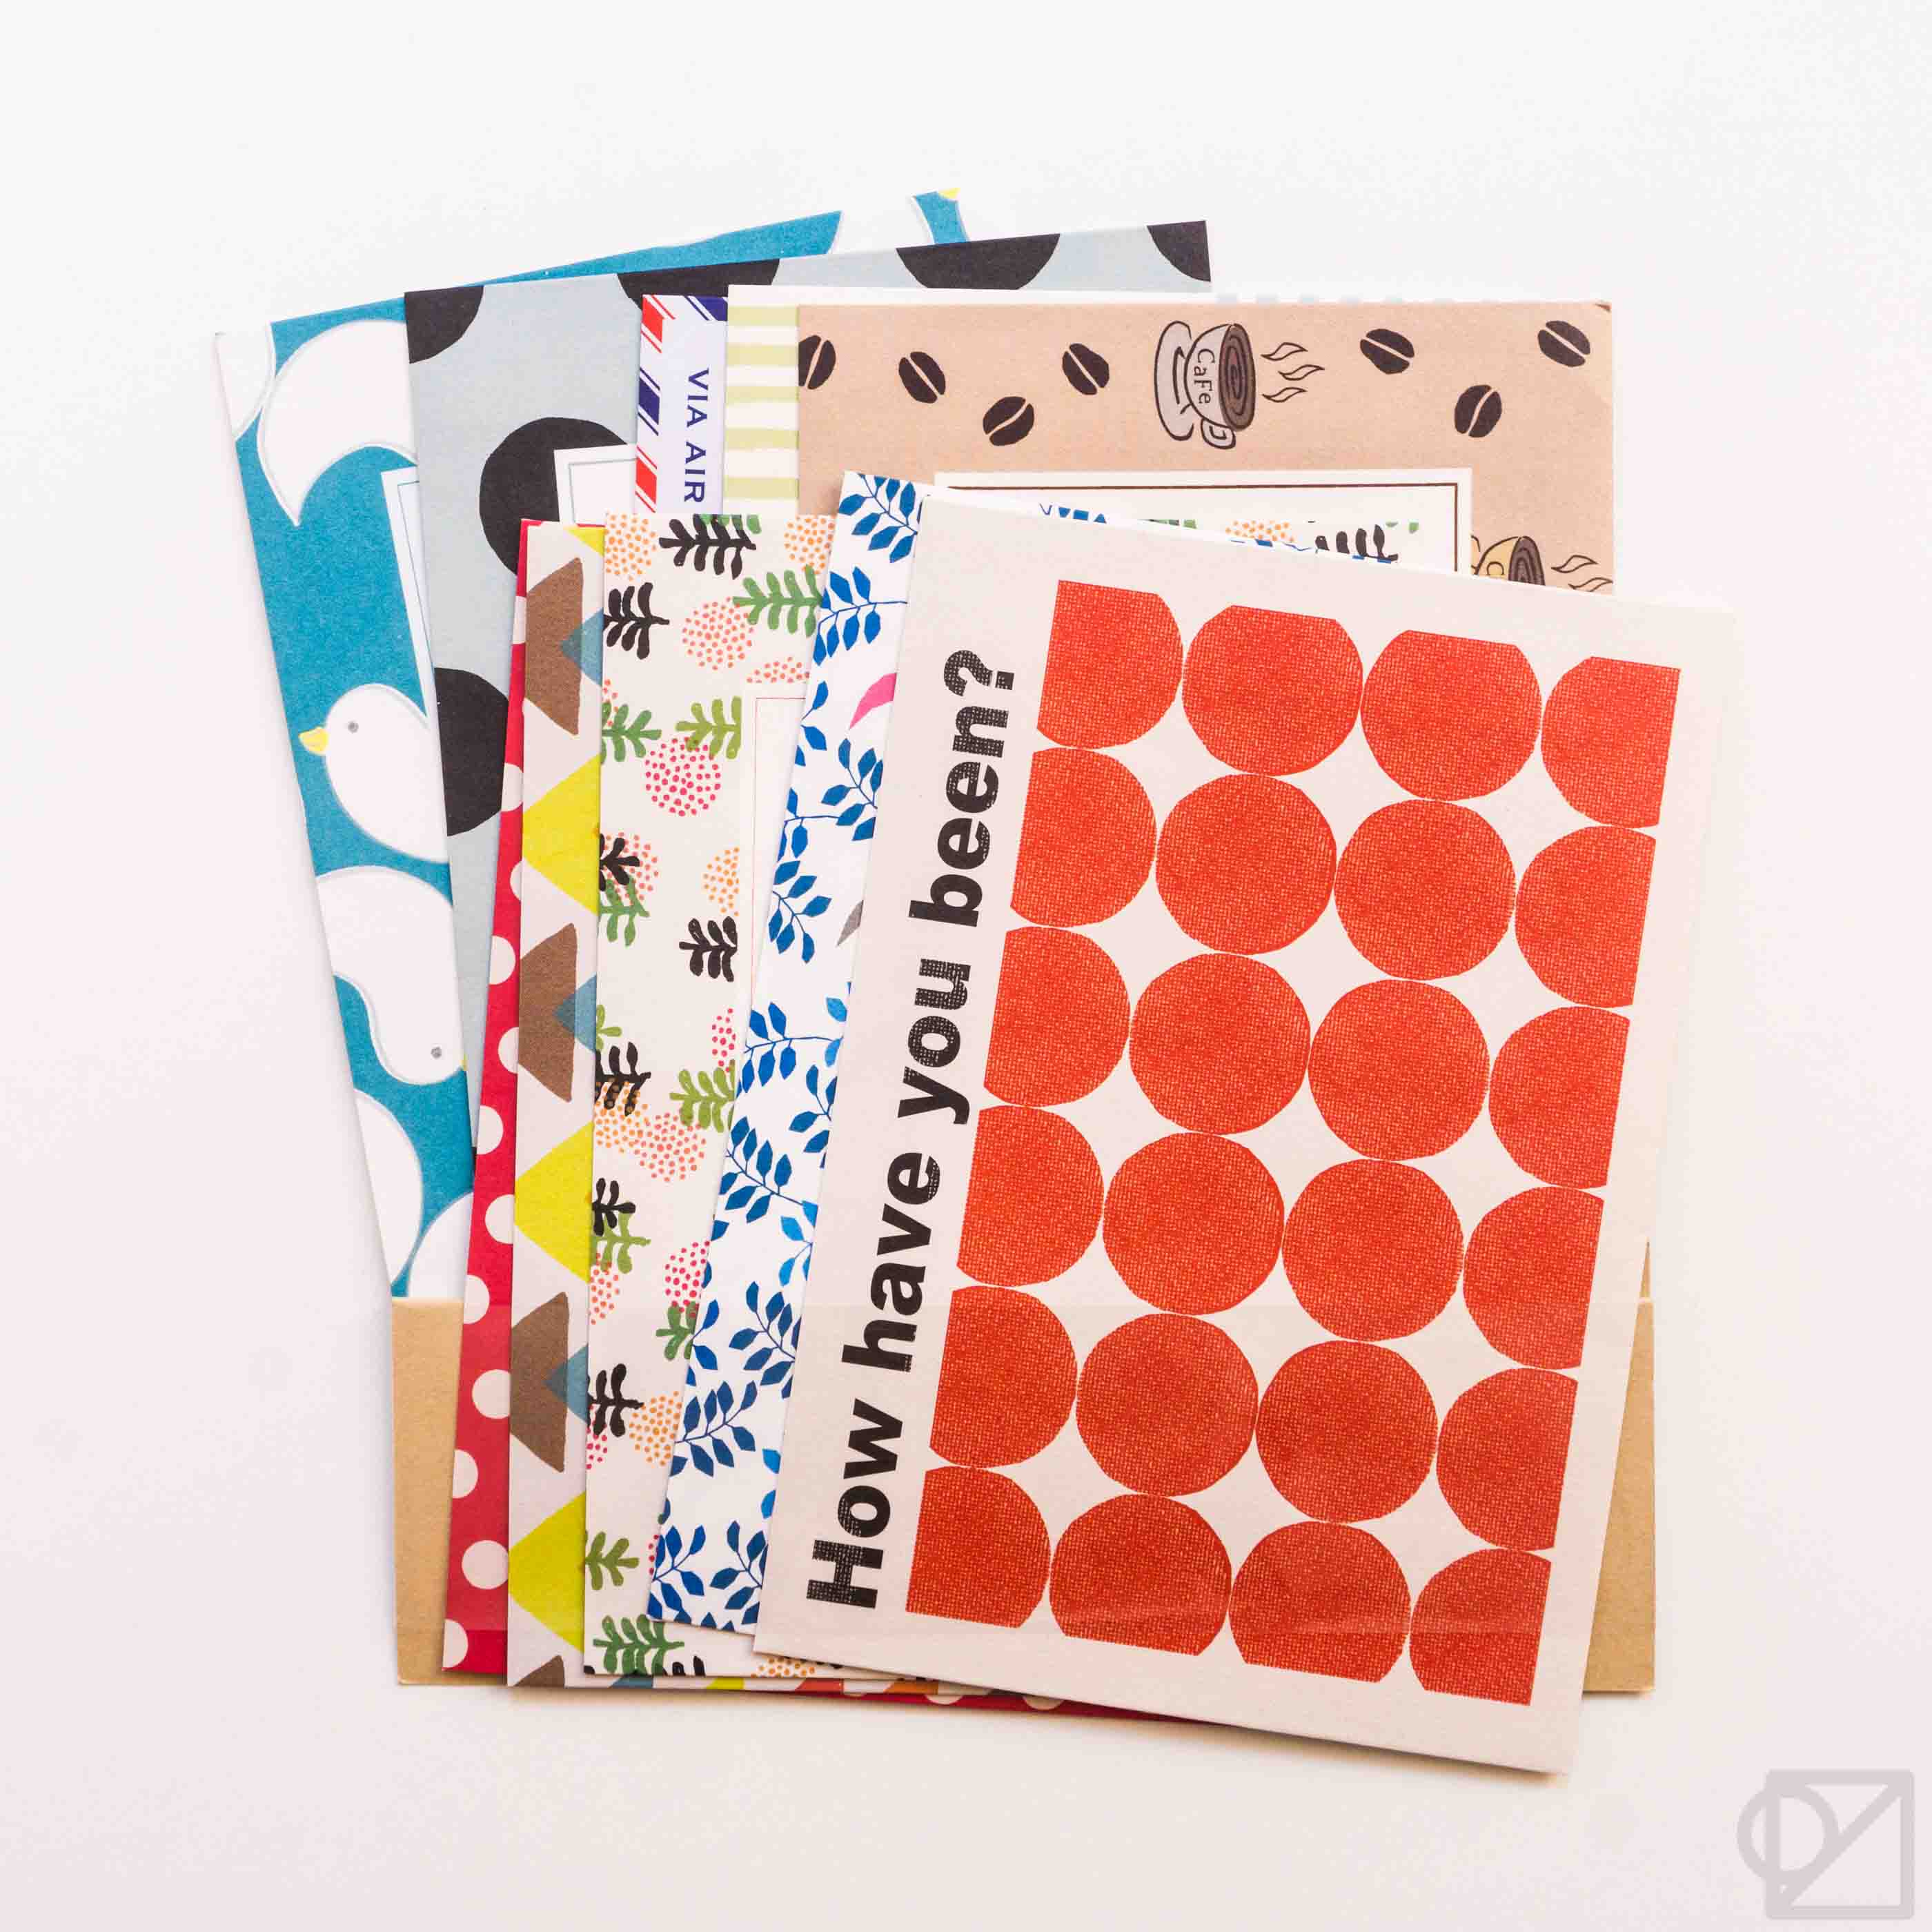 Red Tissue Paper - Midori Retail